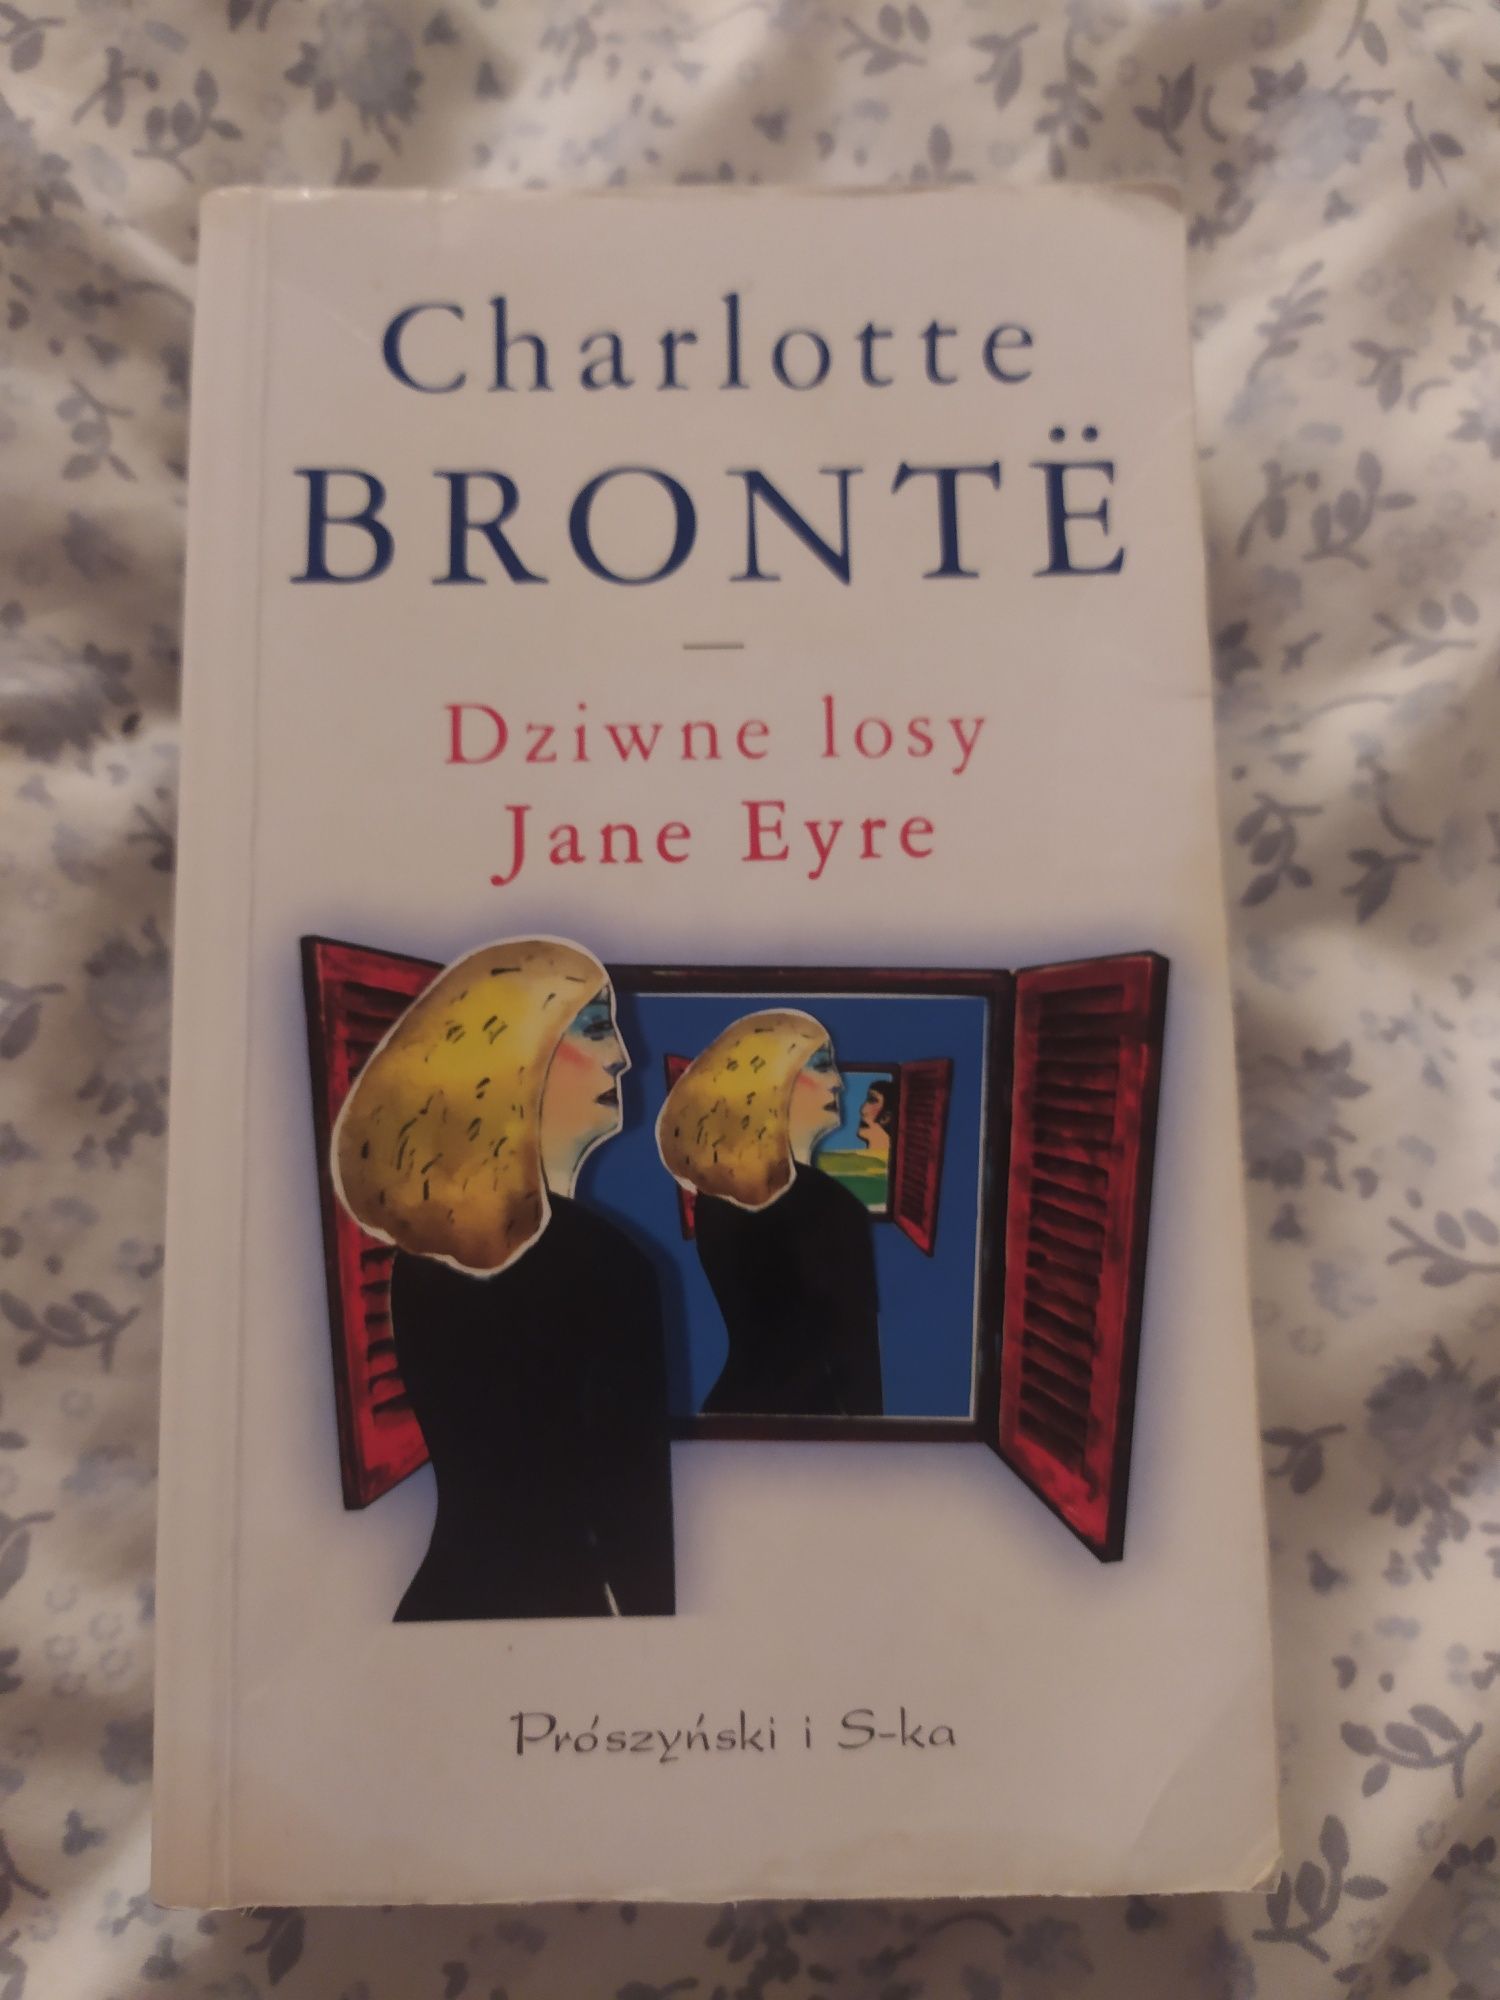 Charlotte Brontë dziwne losy Jane Eyre